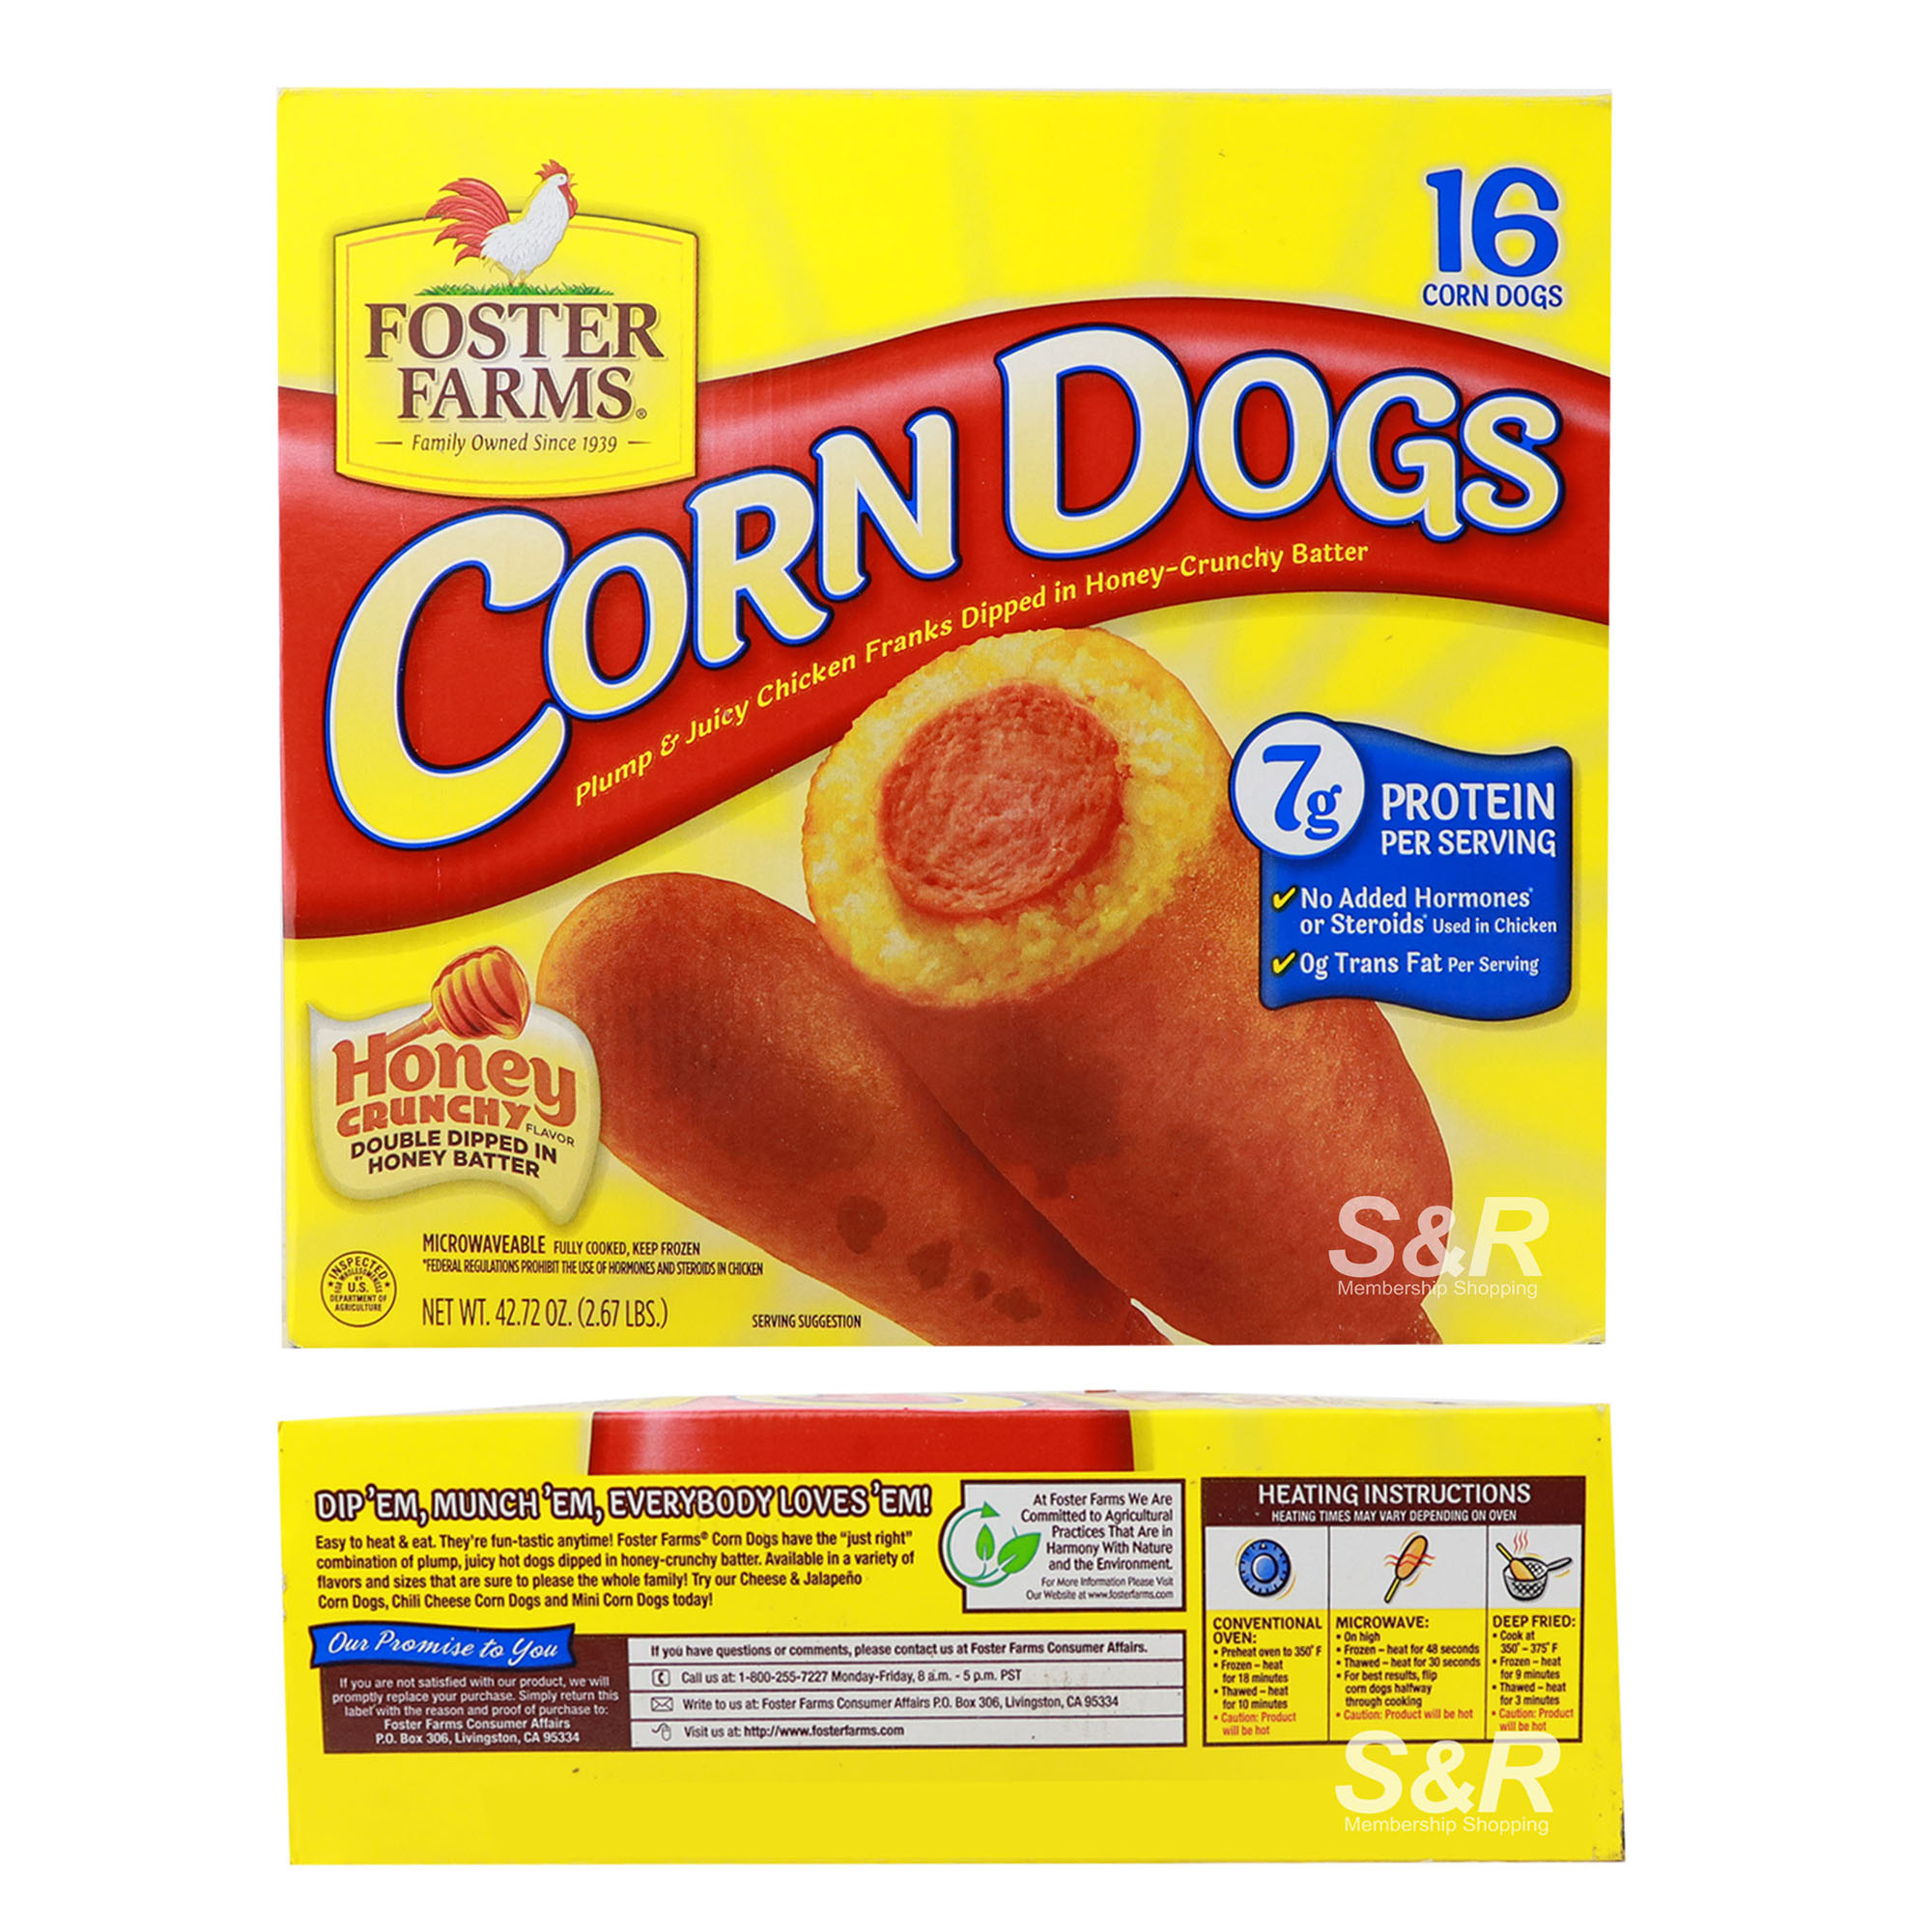 Corn dogs